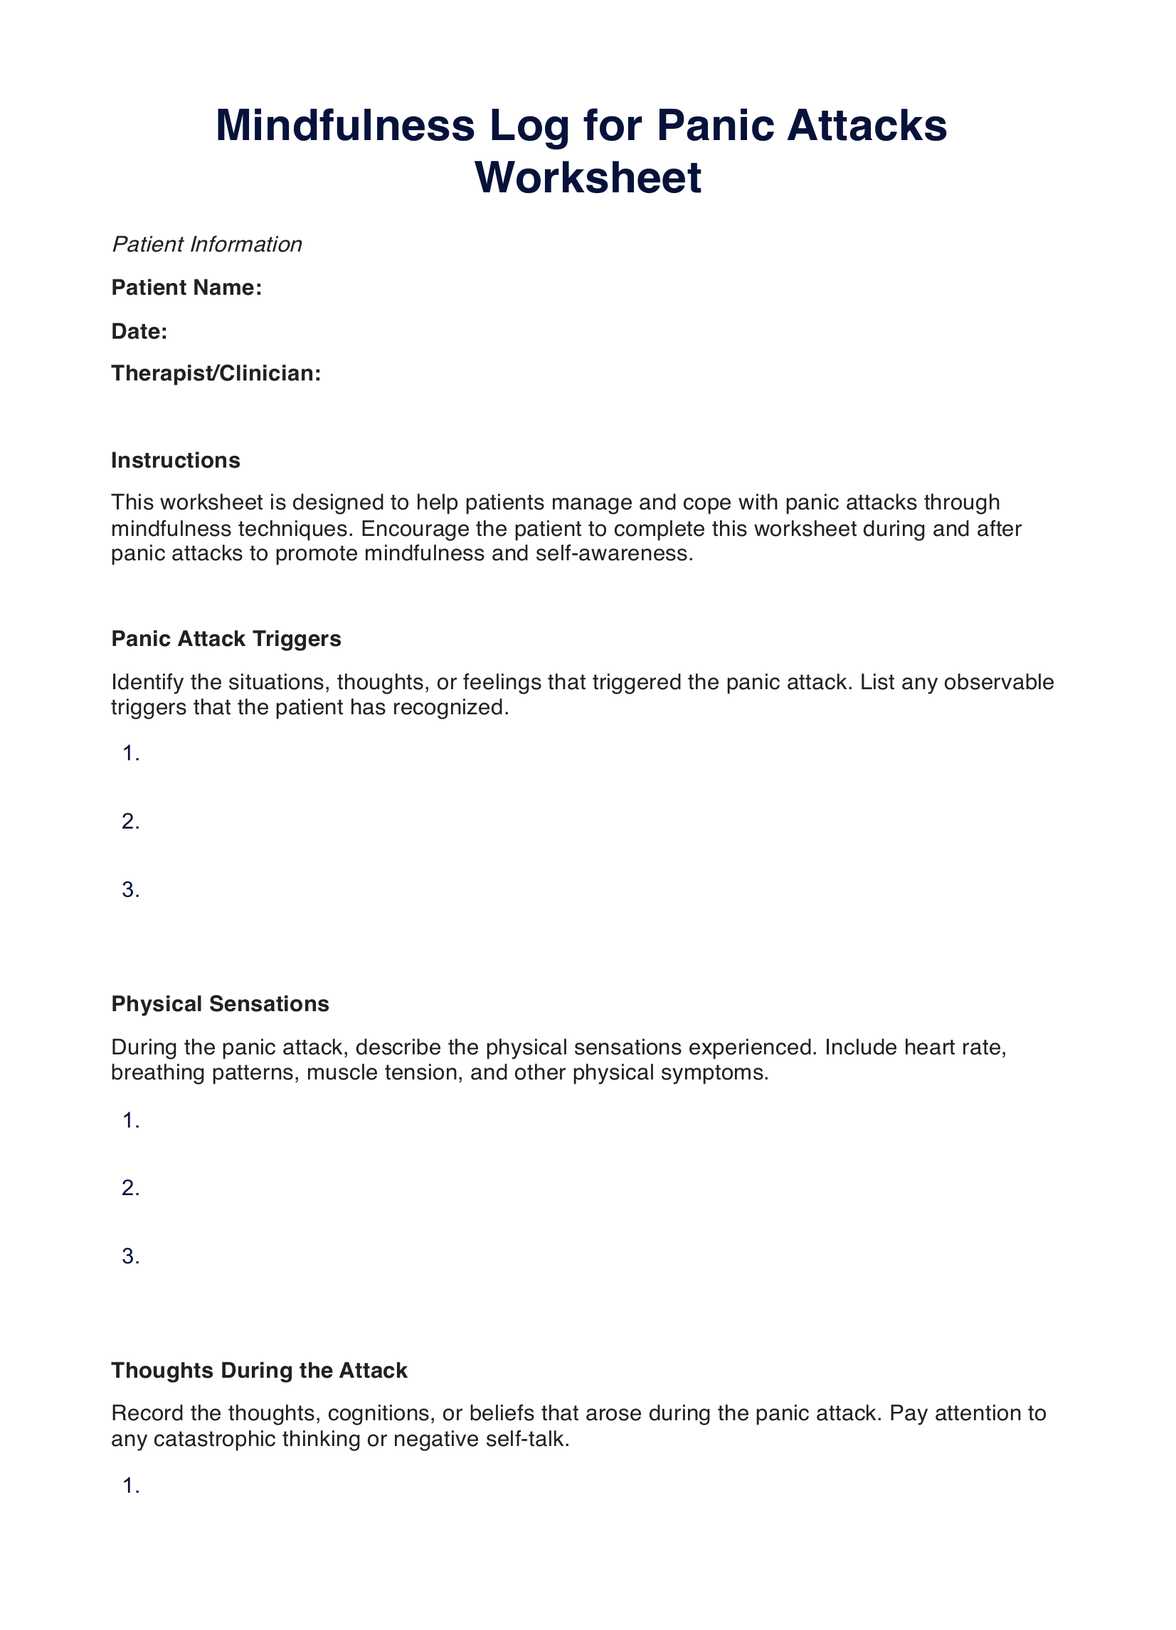 Mindfulness Log for Panic Attacks Worksheet PDF Example